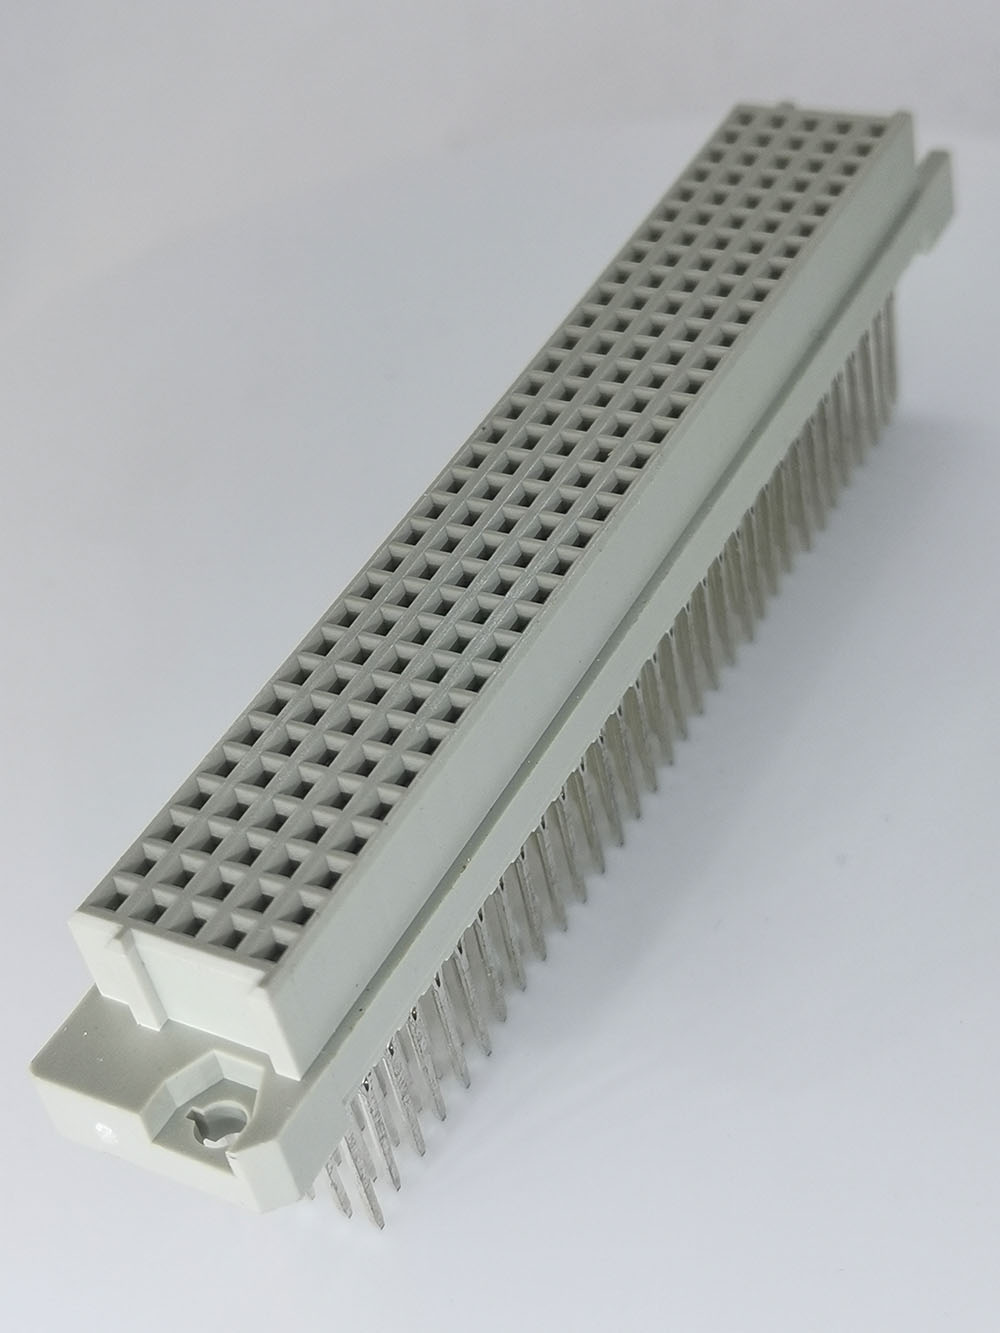 160 Postiones Vertcal Solder Type E Hembra DIN 41612 / IEC 60603-2 Conector